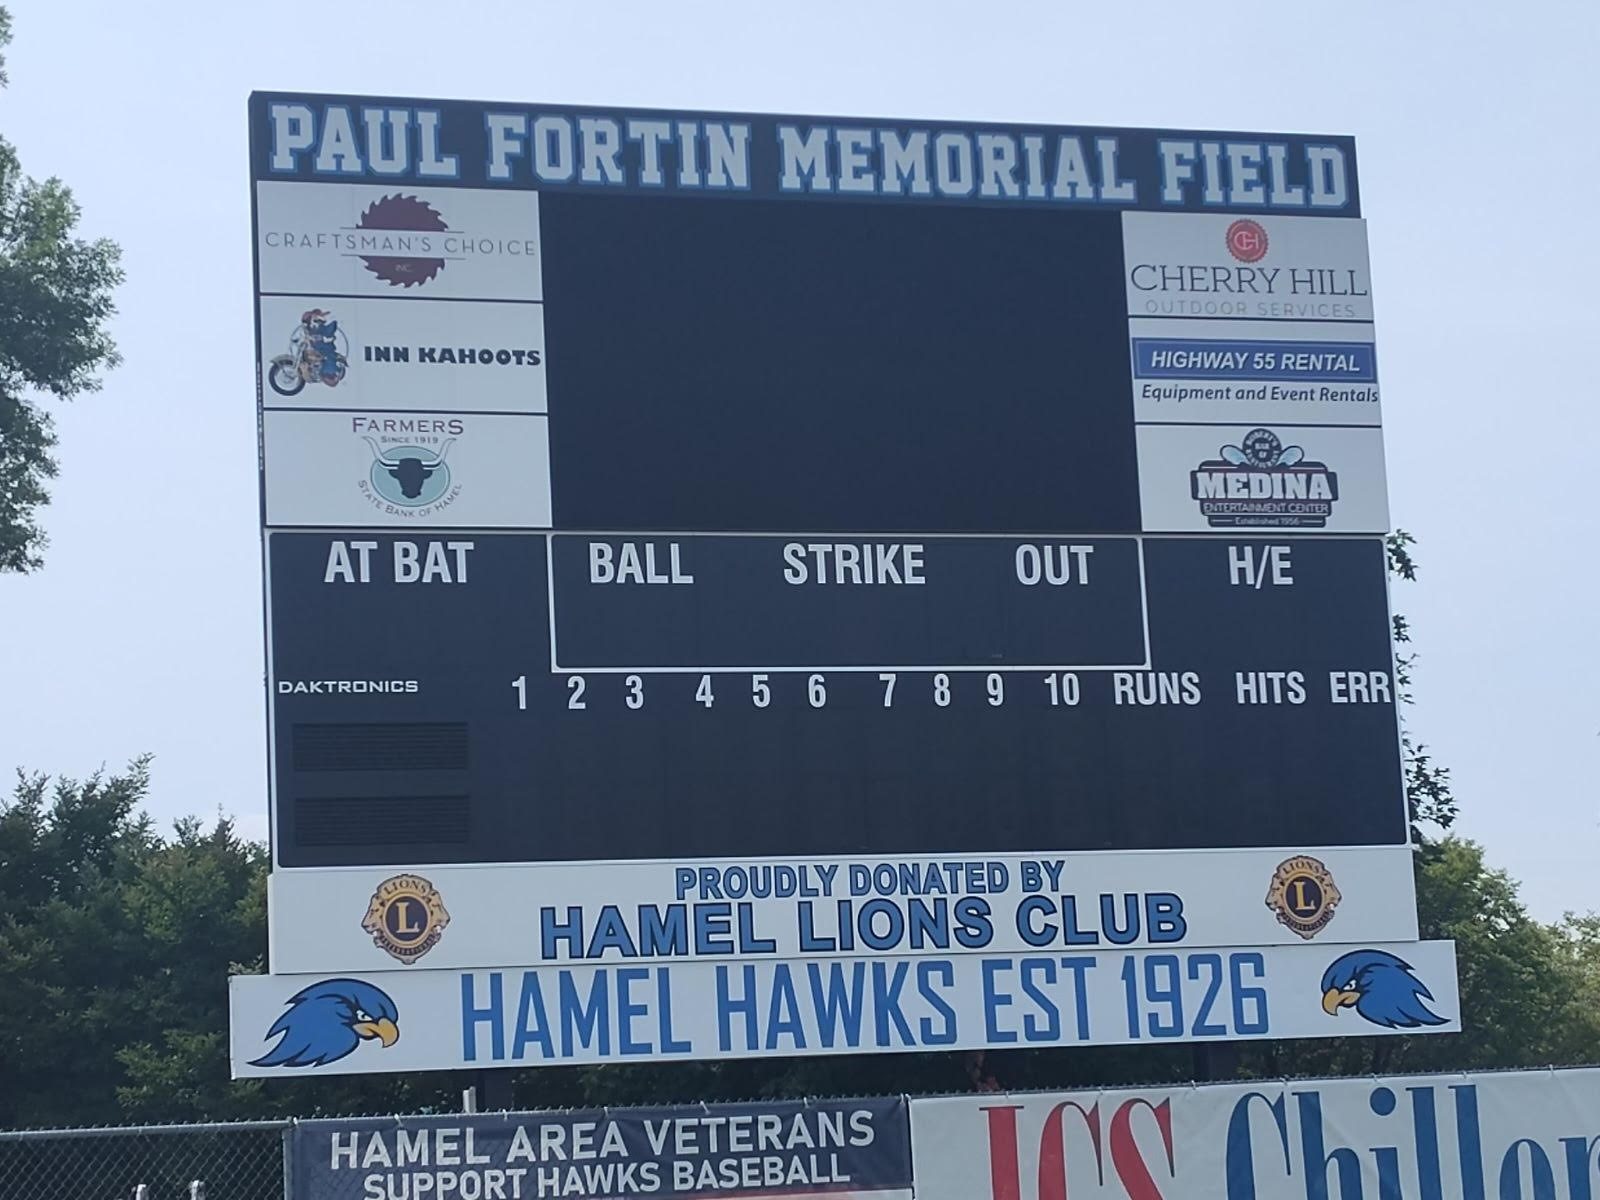 Paul Fortin Memorial Field video scoreboard image